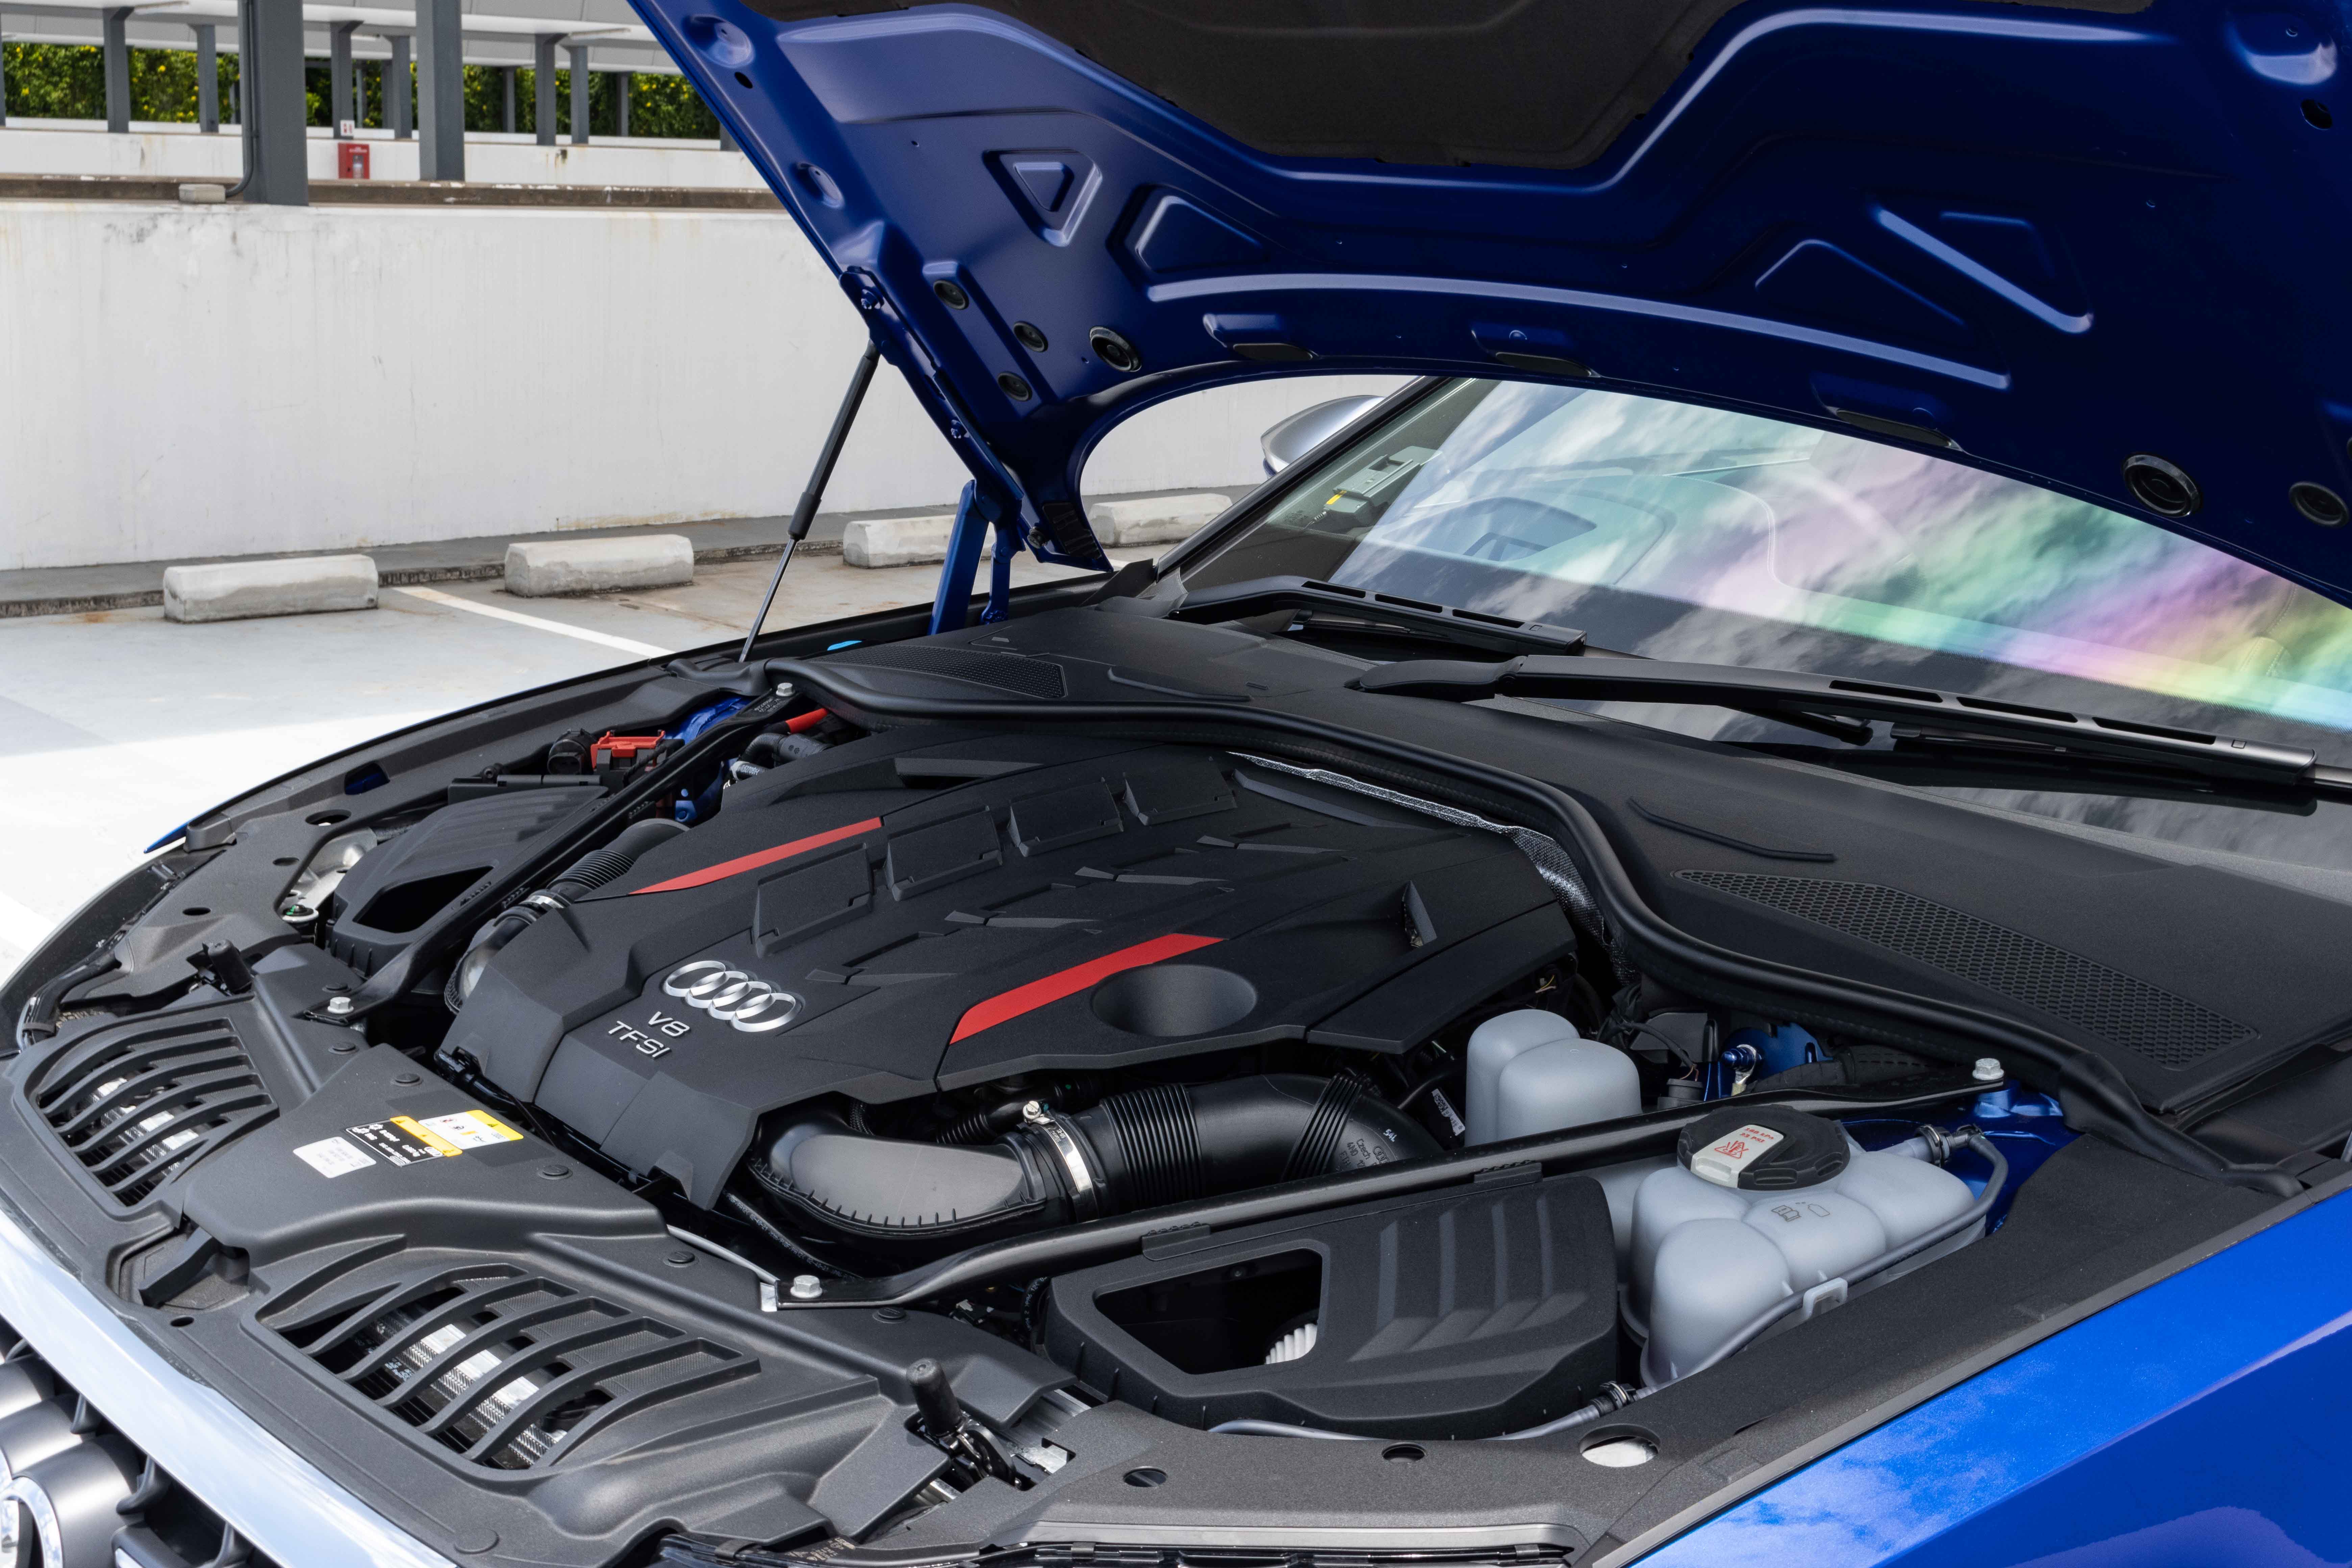 Audi S8 Singapore - Engine cover